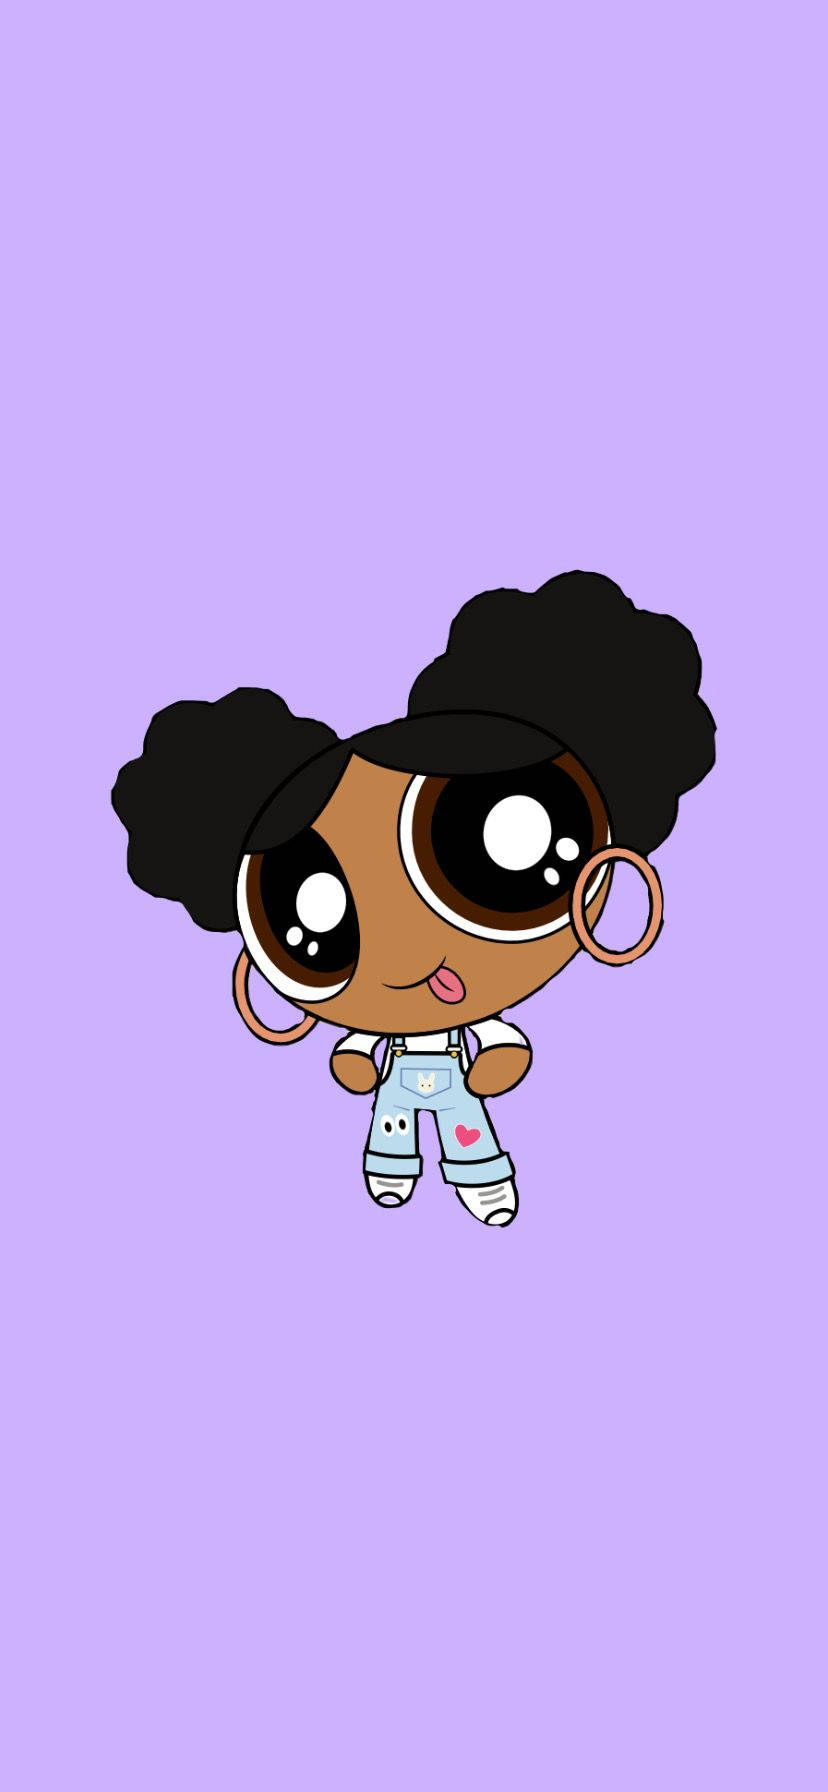 A Joyful Black Girl Cartoon Character Wallpaper